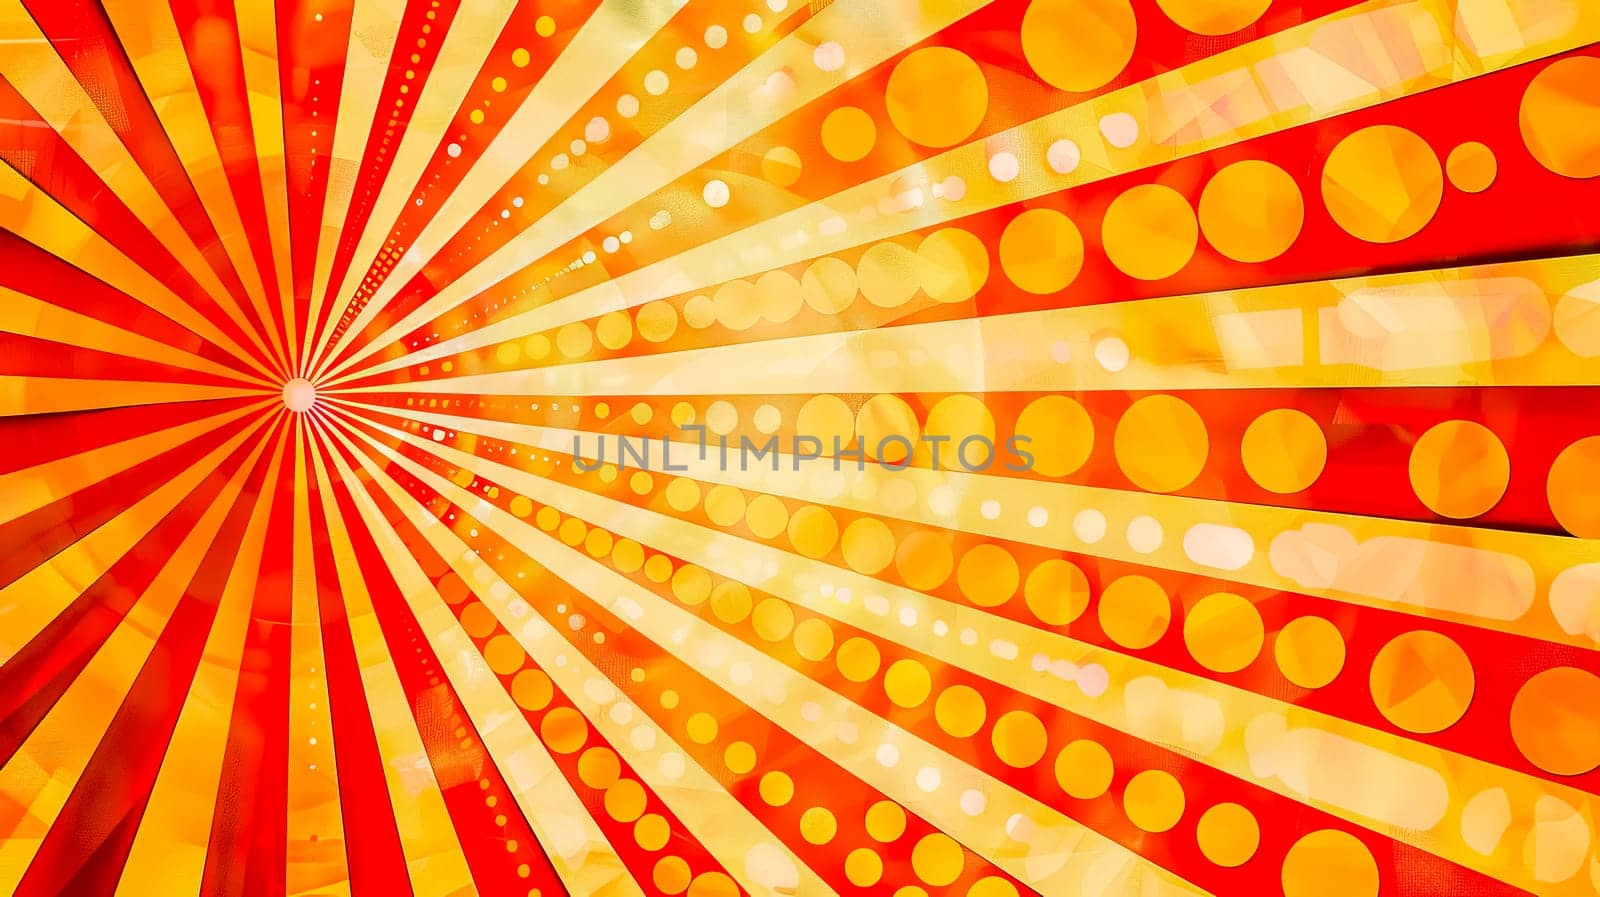 Vibrant sunburst pattern with retro circles by Edophoto